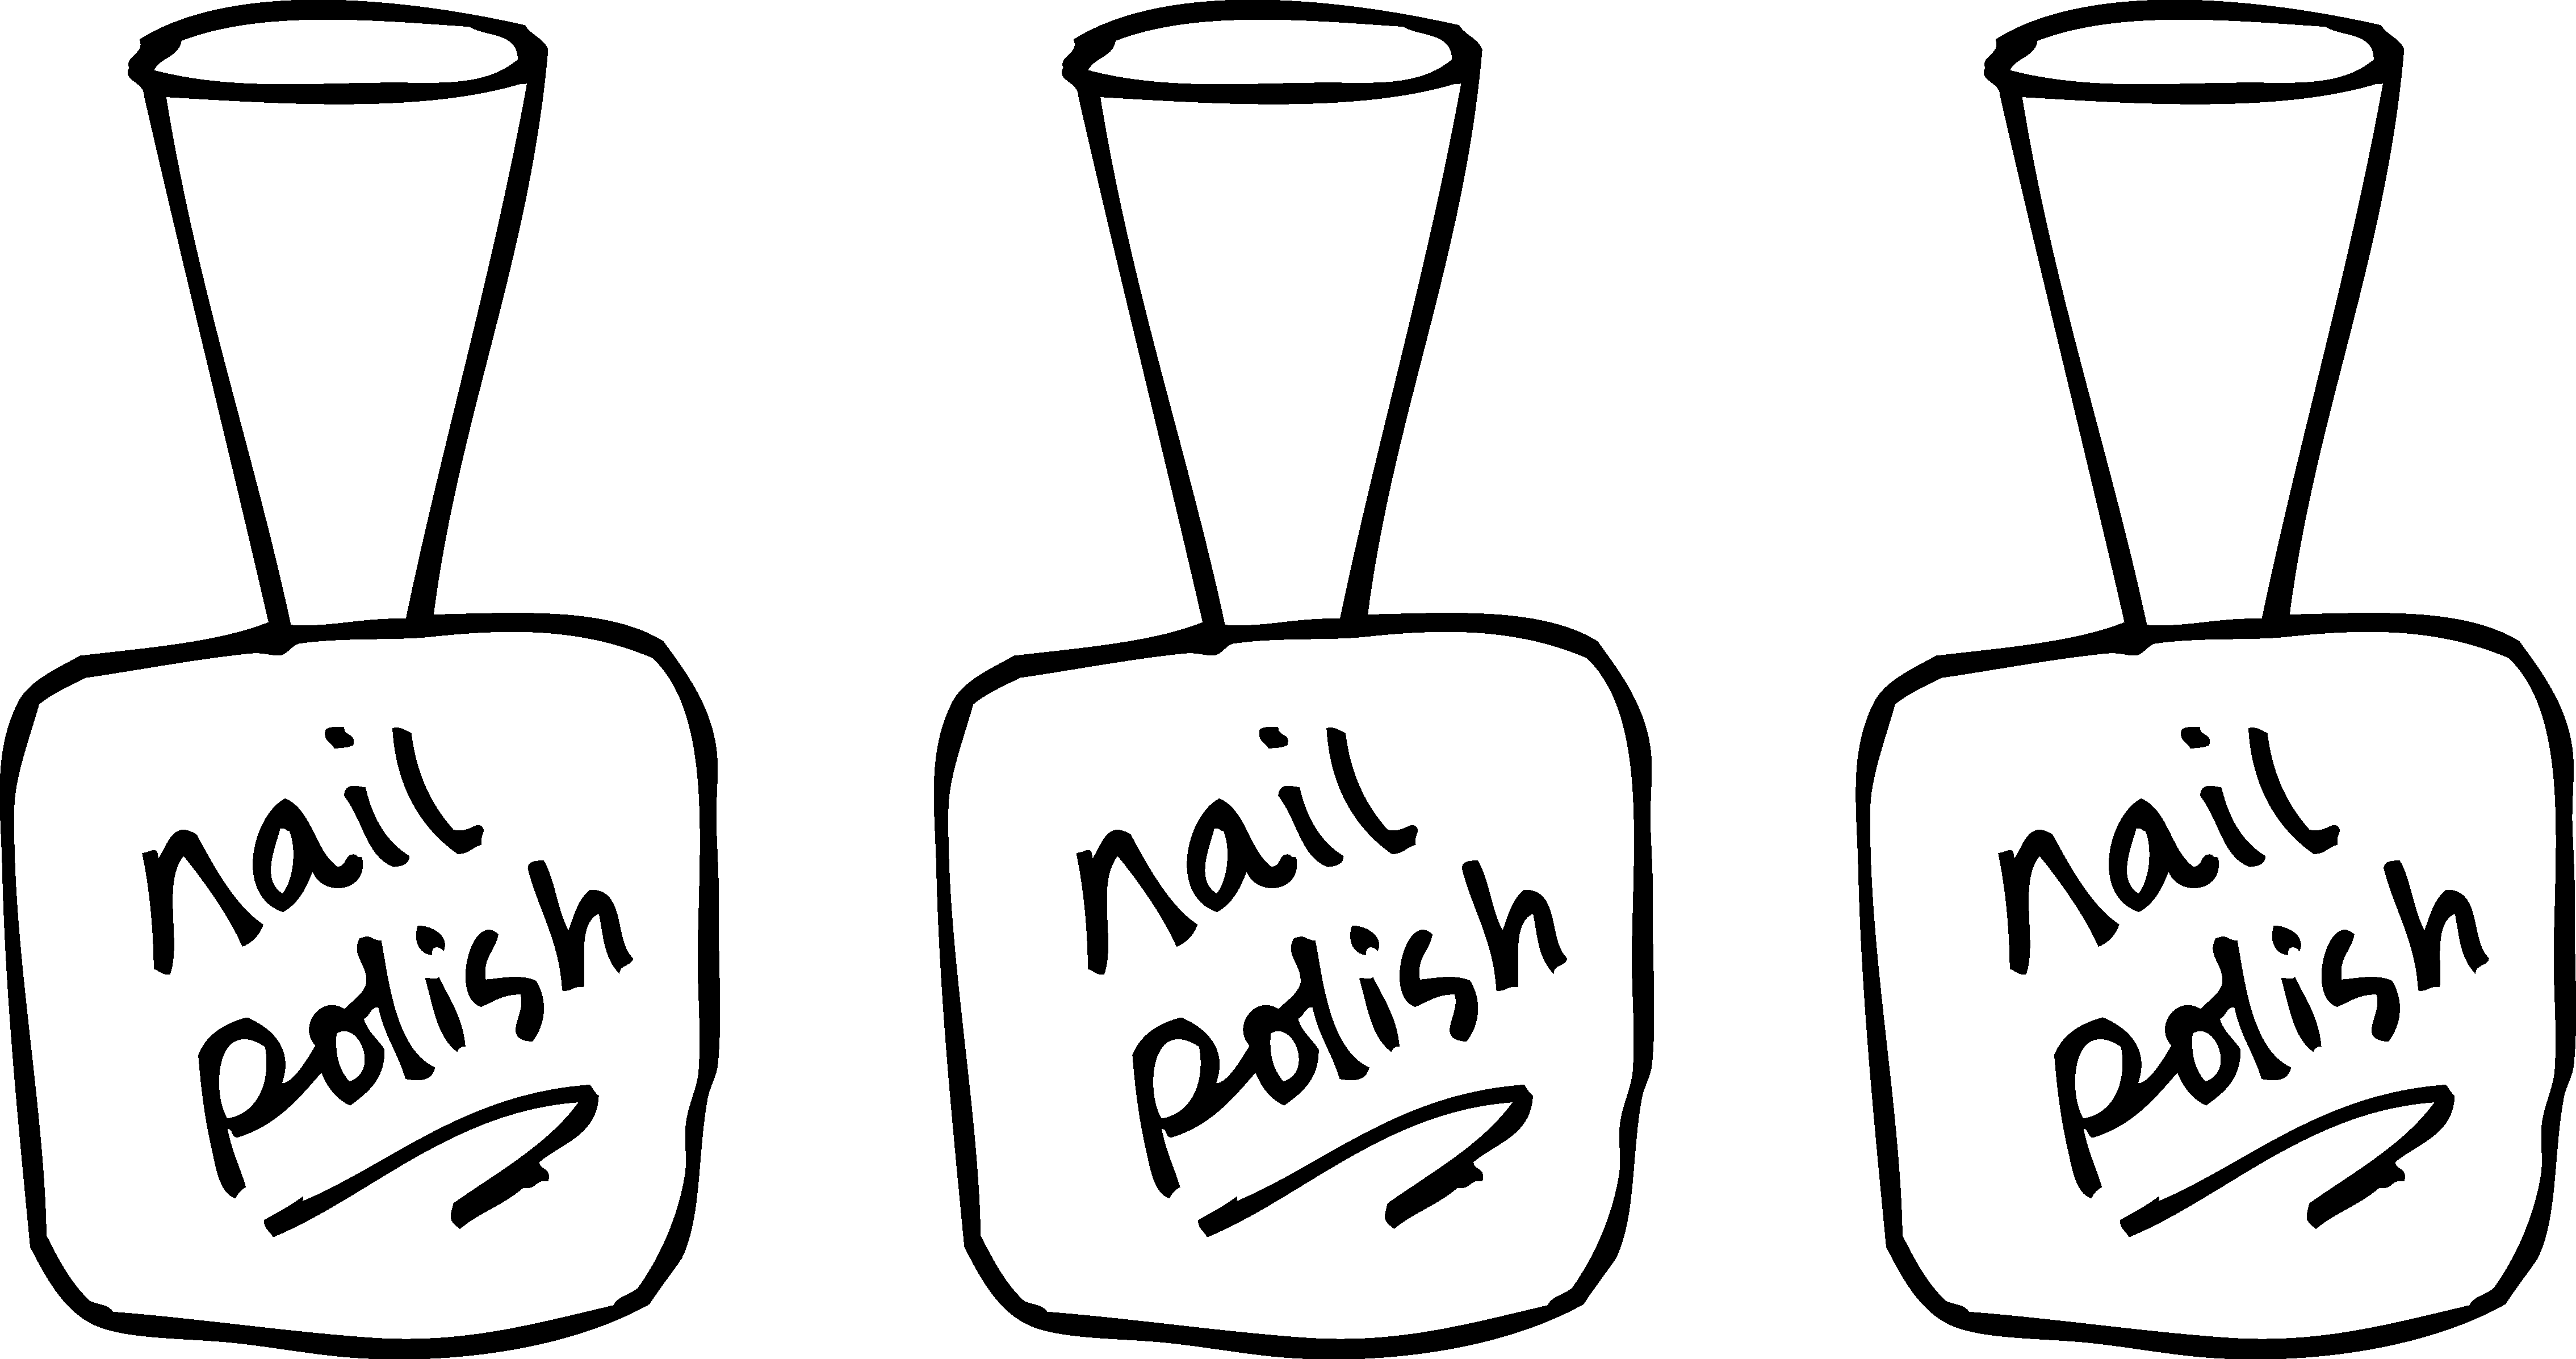 5. Nail polish clip art black and white - wide 11